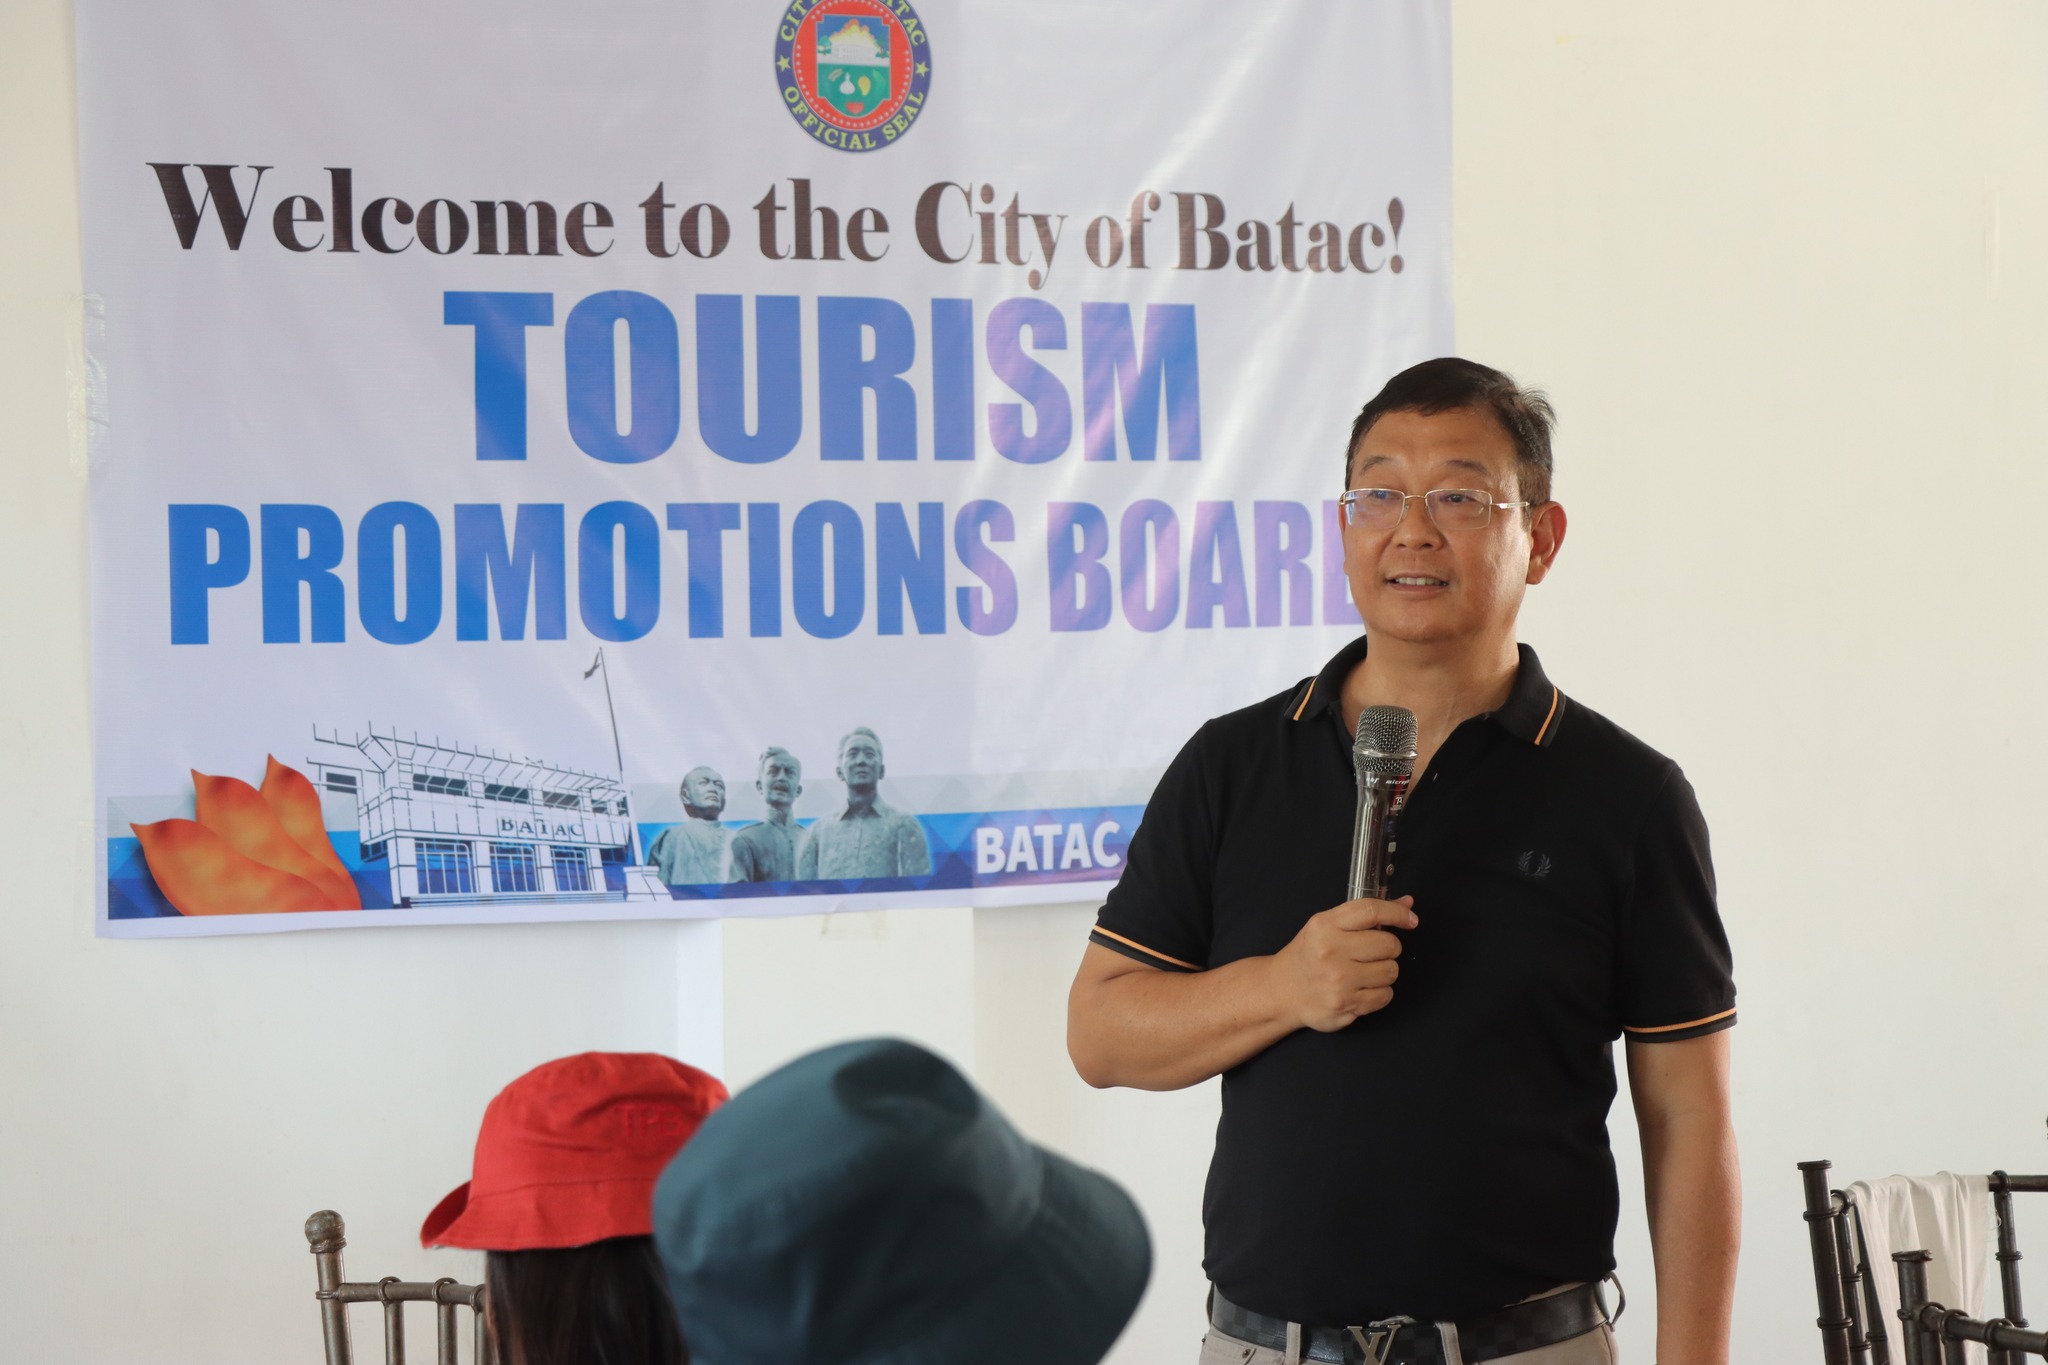 Tourism Promotions Board’s visit in Batac